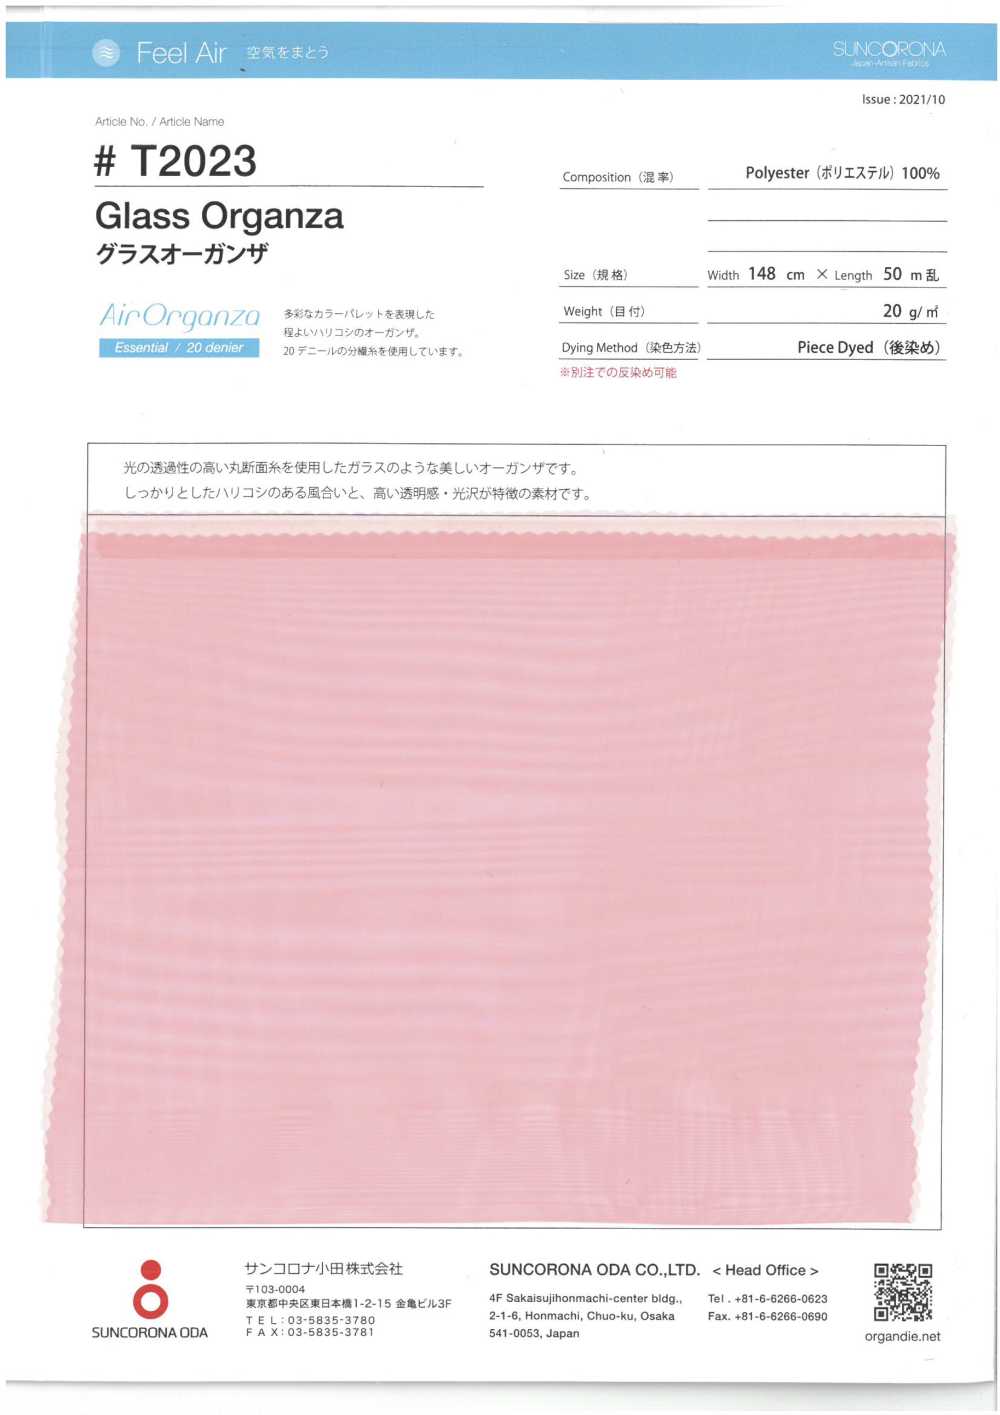 T2023 Organza De Vidro[Têxtil / Tecido] Suncorona Oda